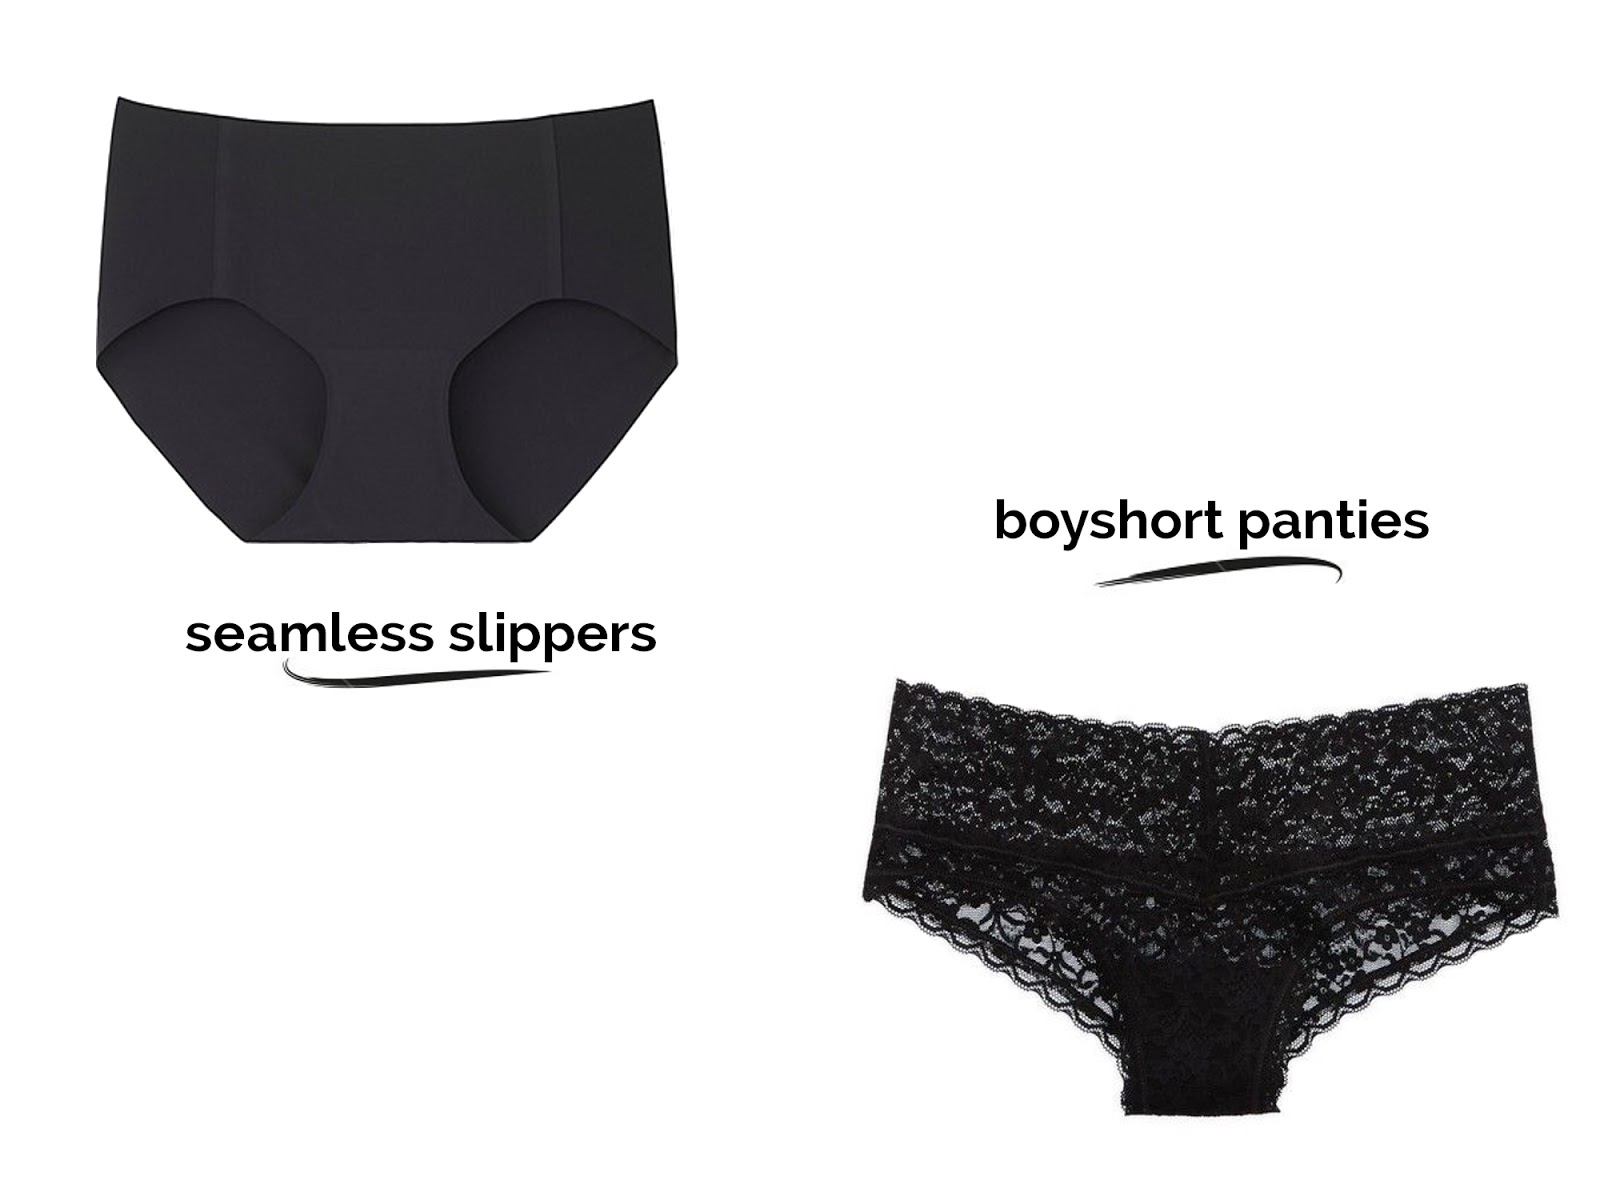 underwear panties bra must have lingerie drawer closet liz breygel fashion